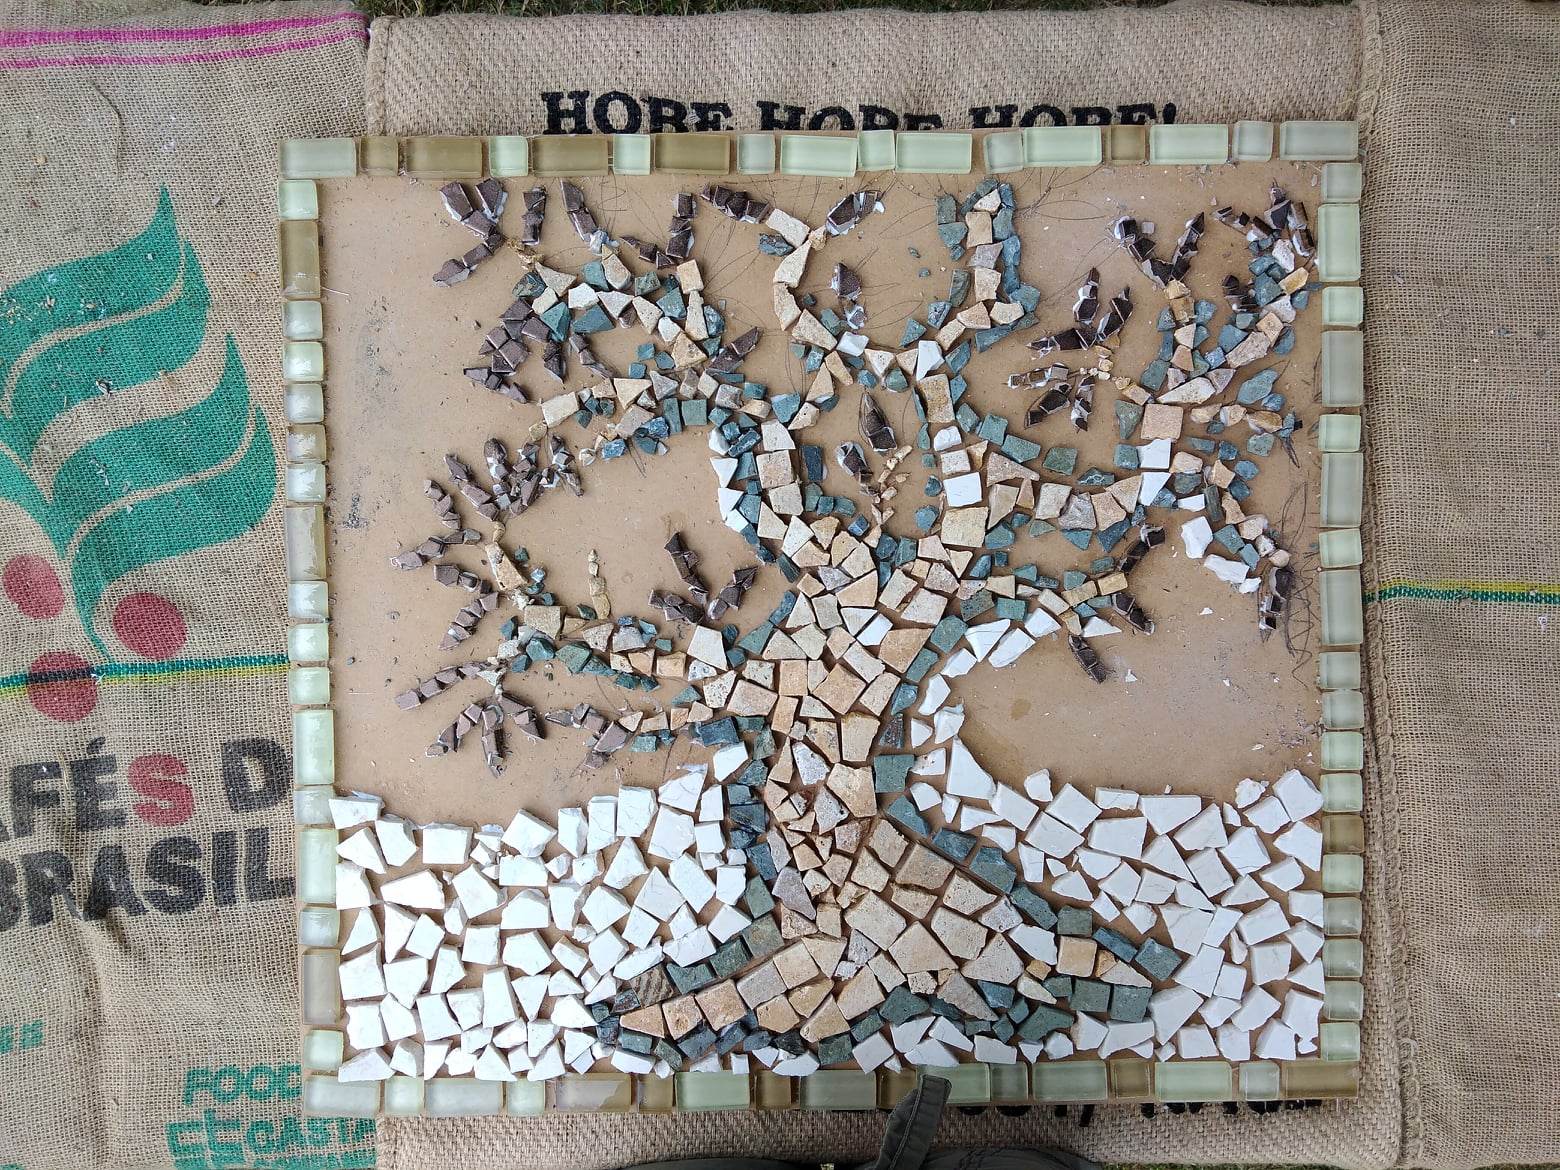 The tree mosaic starting to take shape